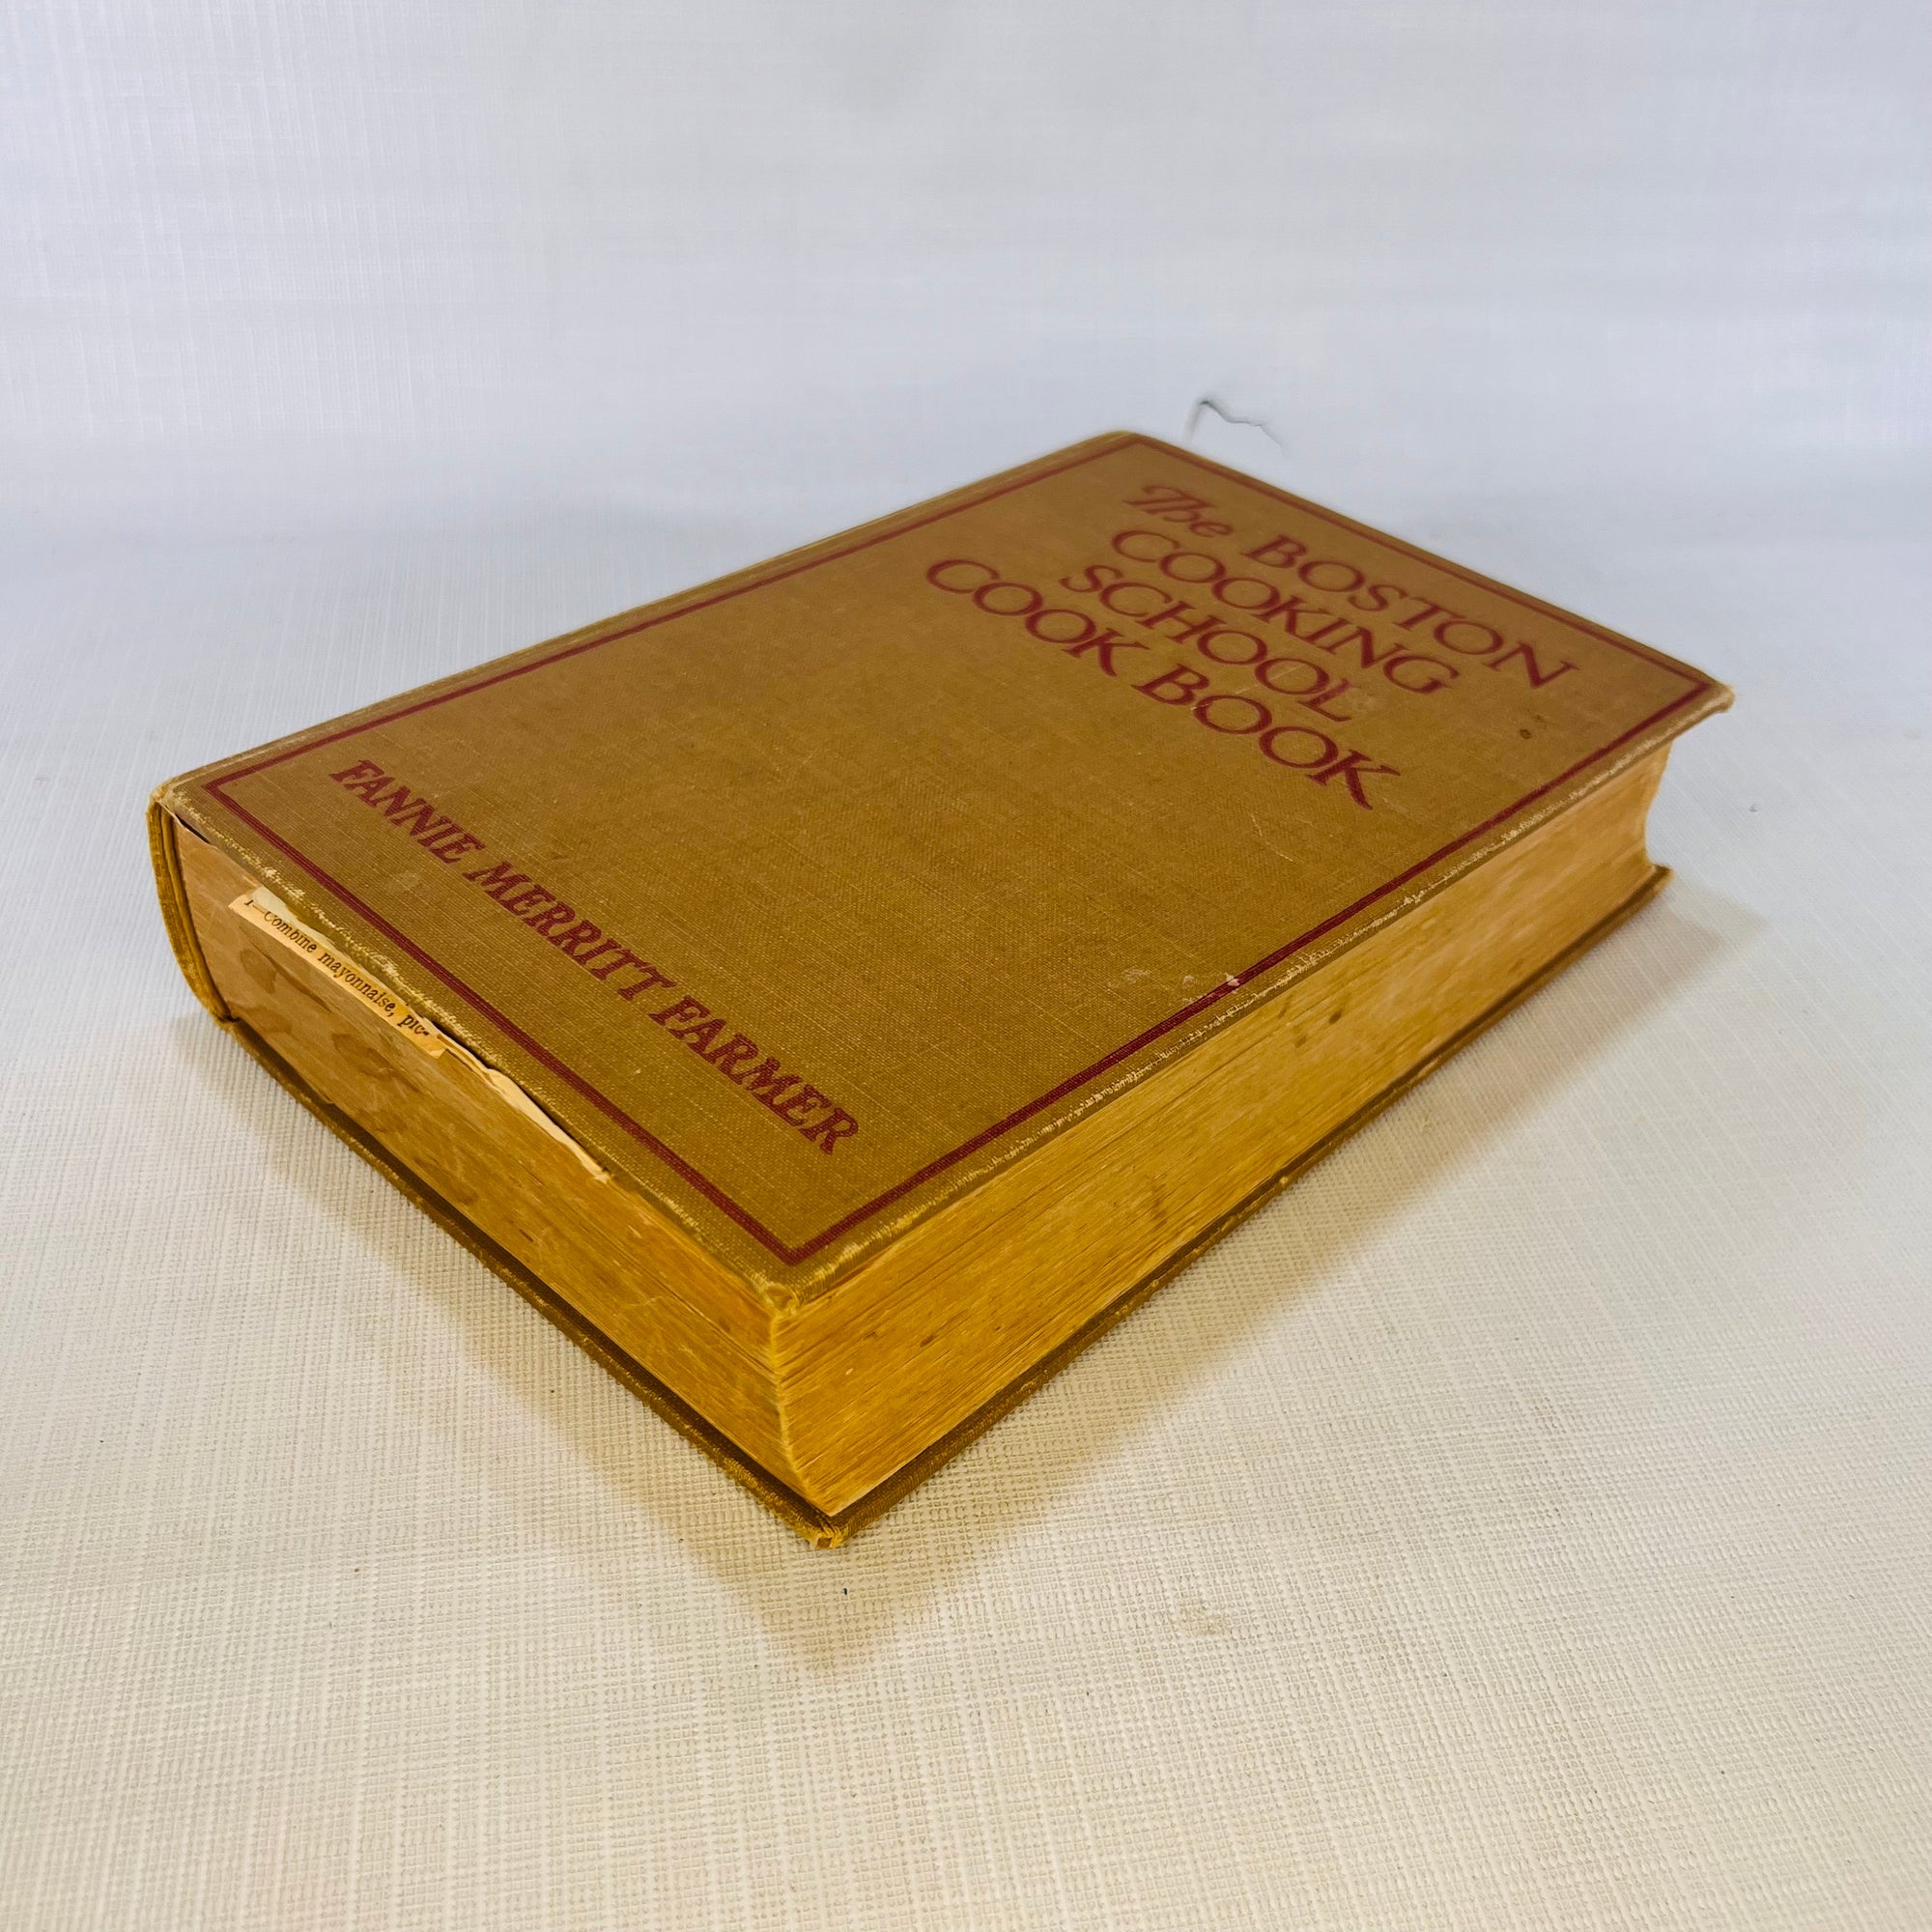 The Boston Cooking School Cook Book by Fannie Merritt Farmer 1937 Little Brown & Company